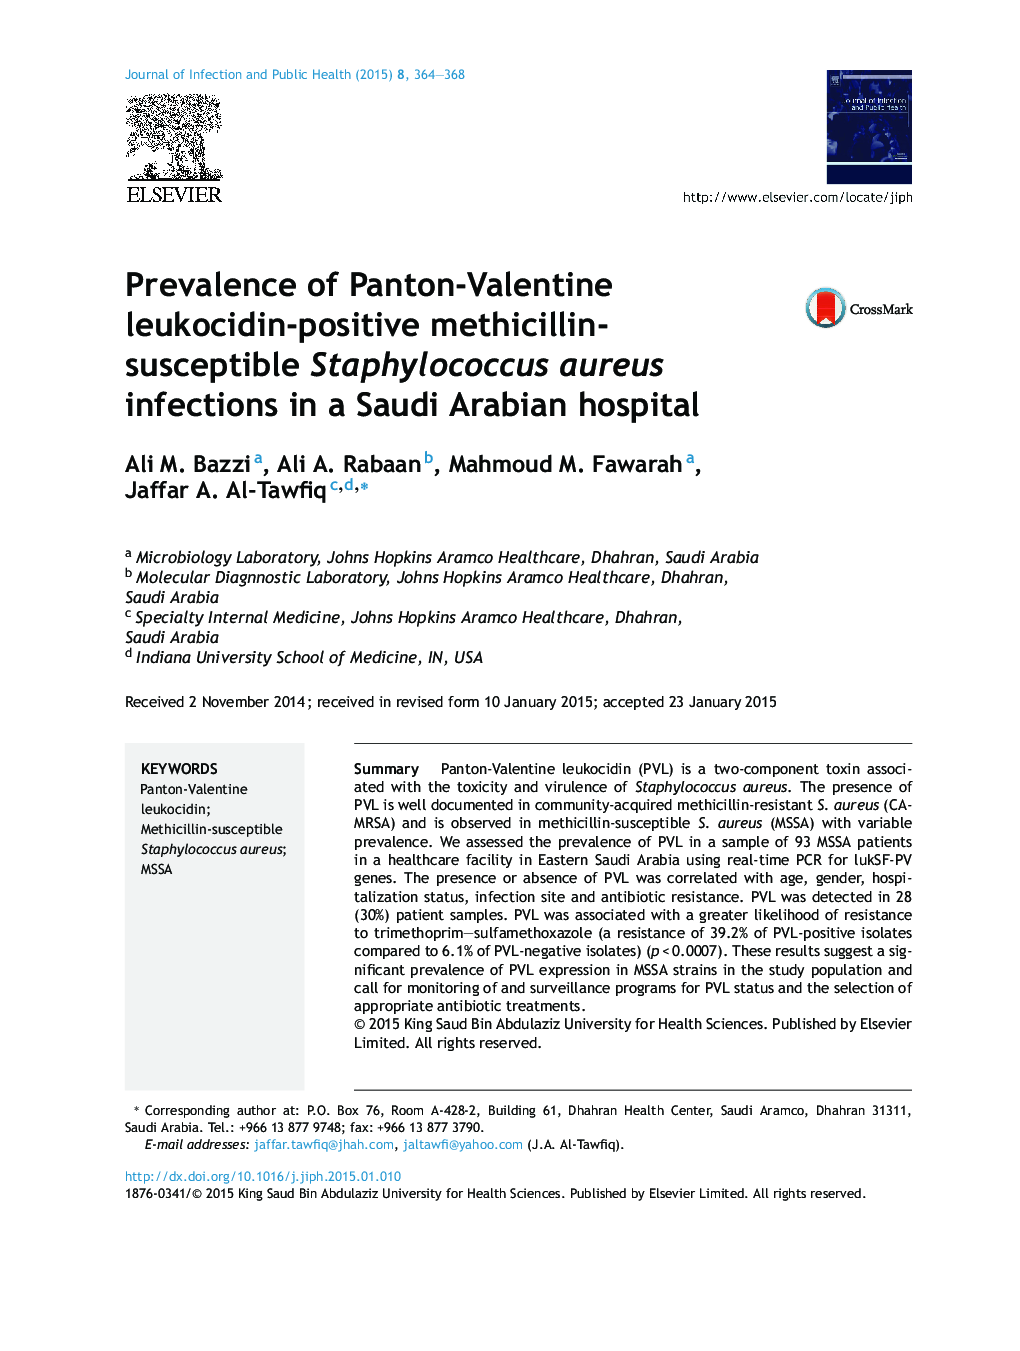 Prevalence of Panton-Valentine leukocidin-positive methicillin-susceptible Staphylococcus aureus infections in a Saudi Arabian hospital